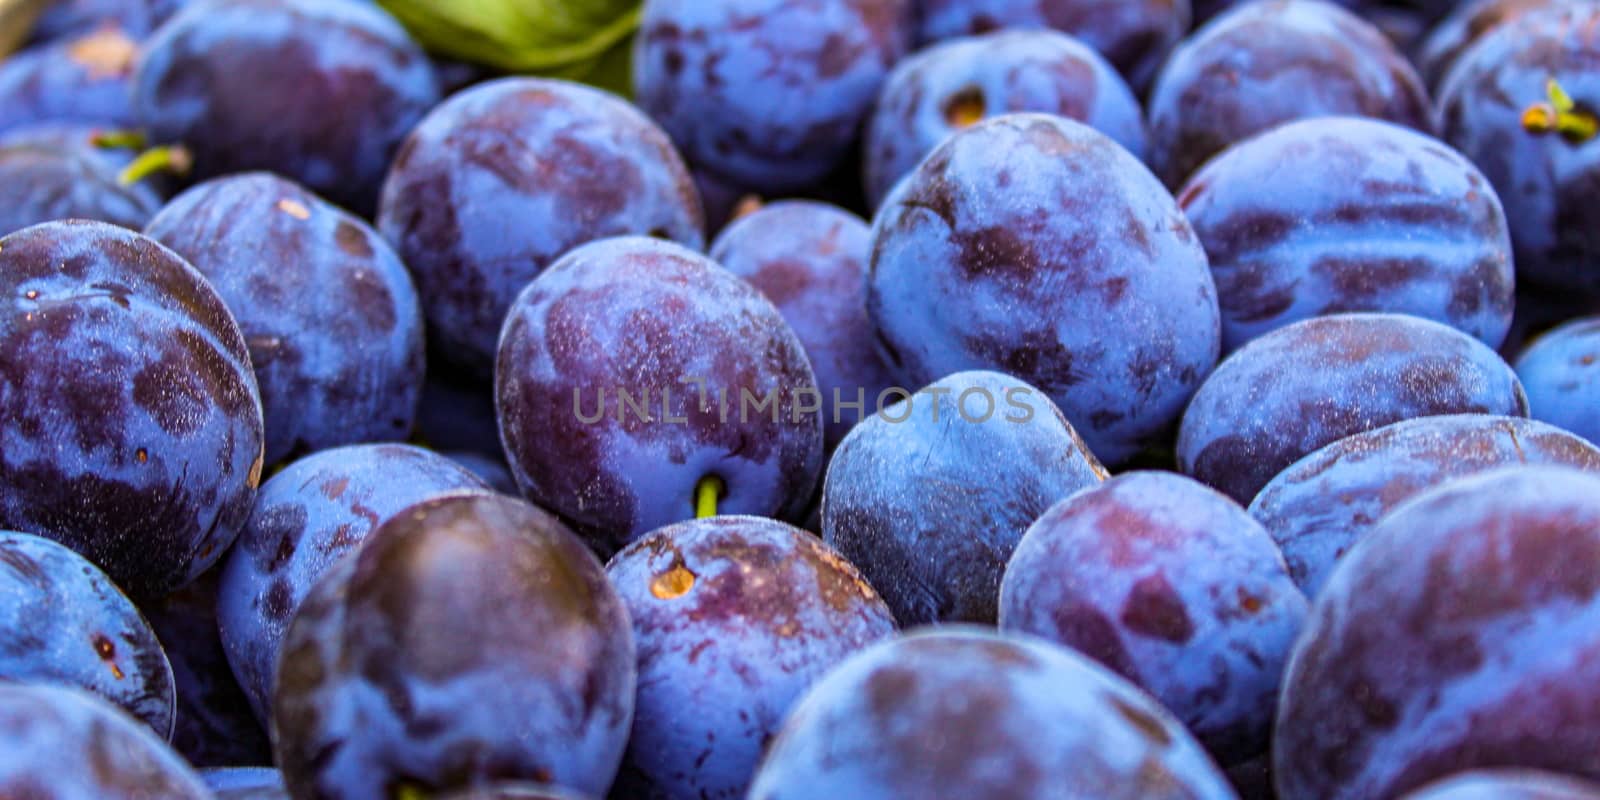 Banner of fruit plums, prunus domestica. Zavidovici, Bosnia and Herzegovina.